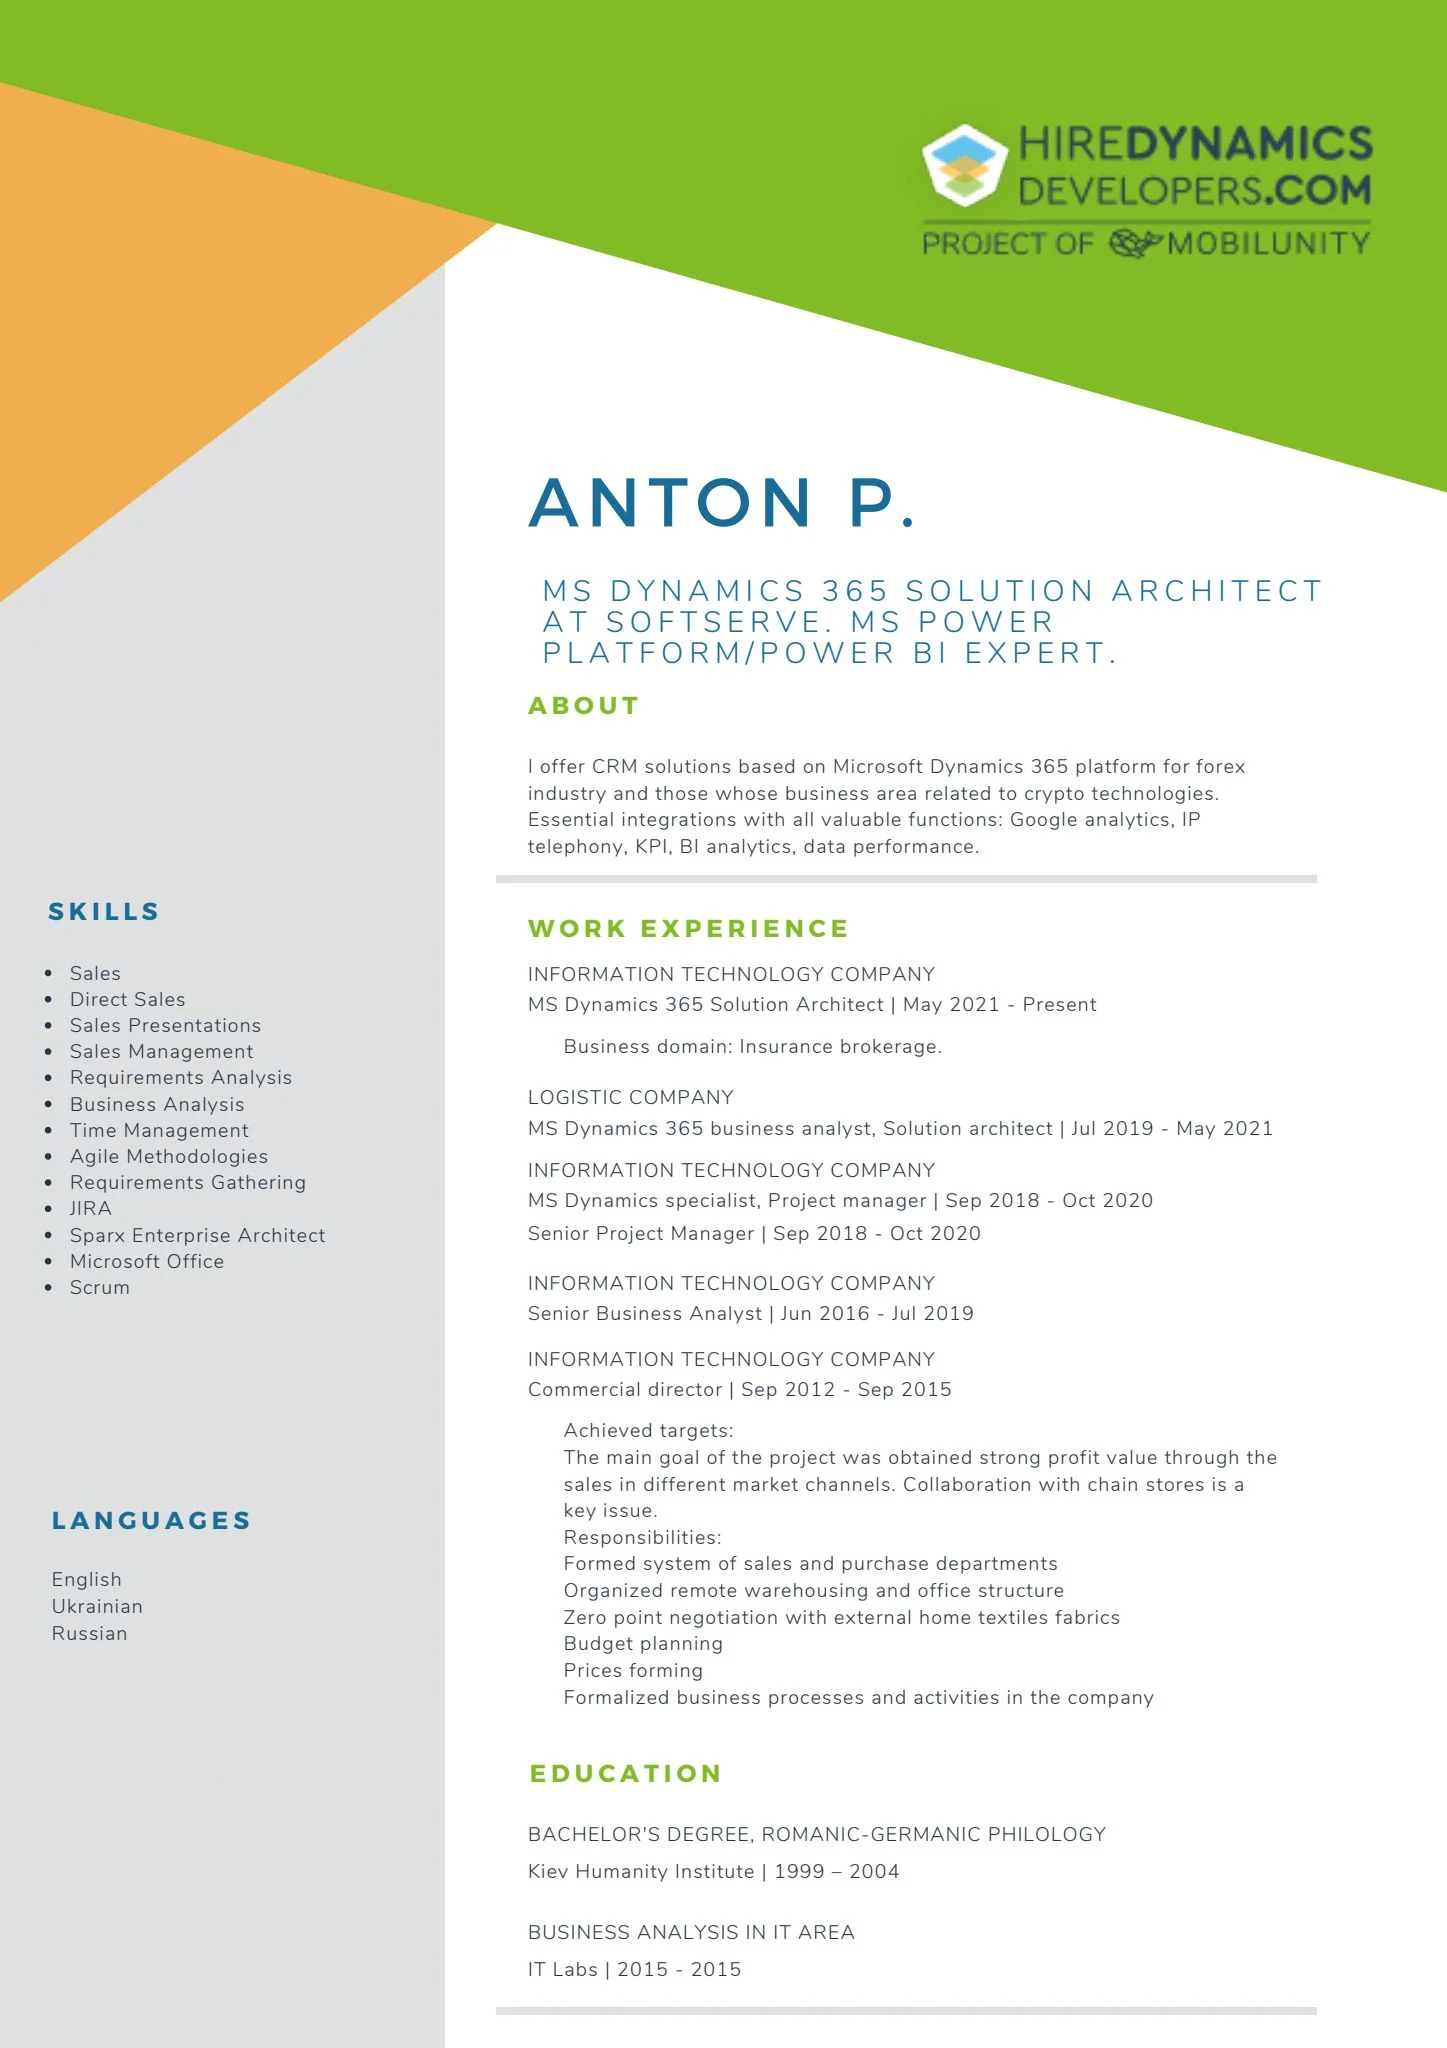 Anton P. – MS Dynamics 365 CE Functional Solution Architect / MS Power Platform/Power BI expert